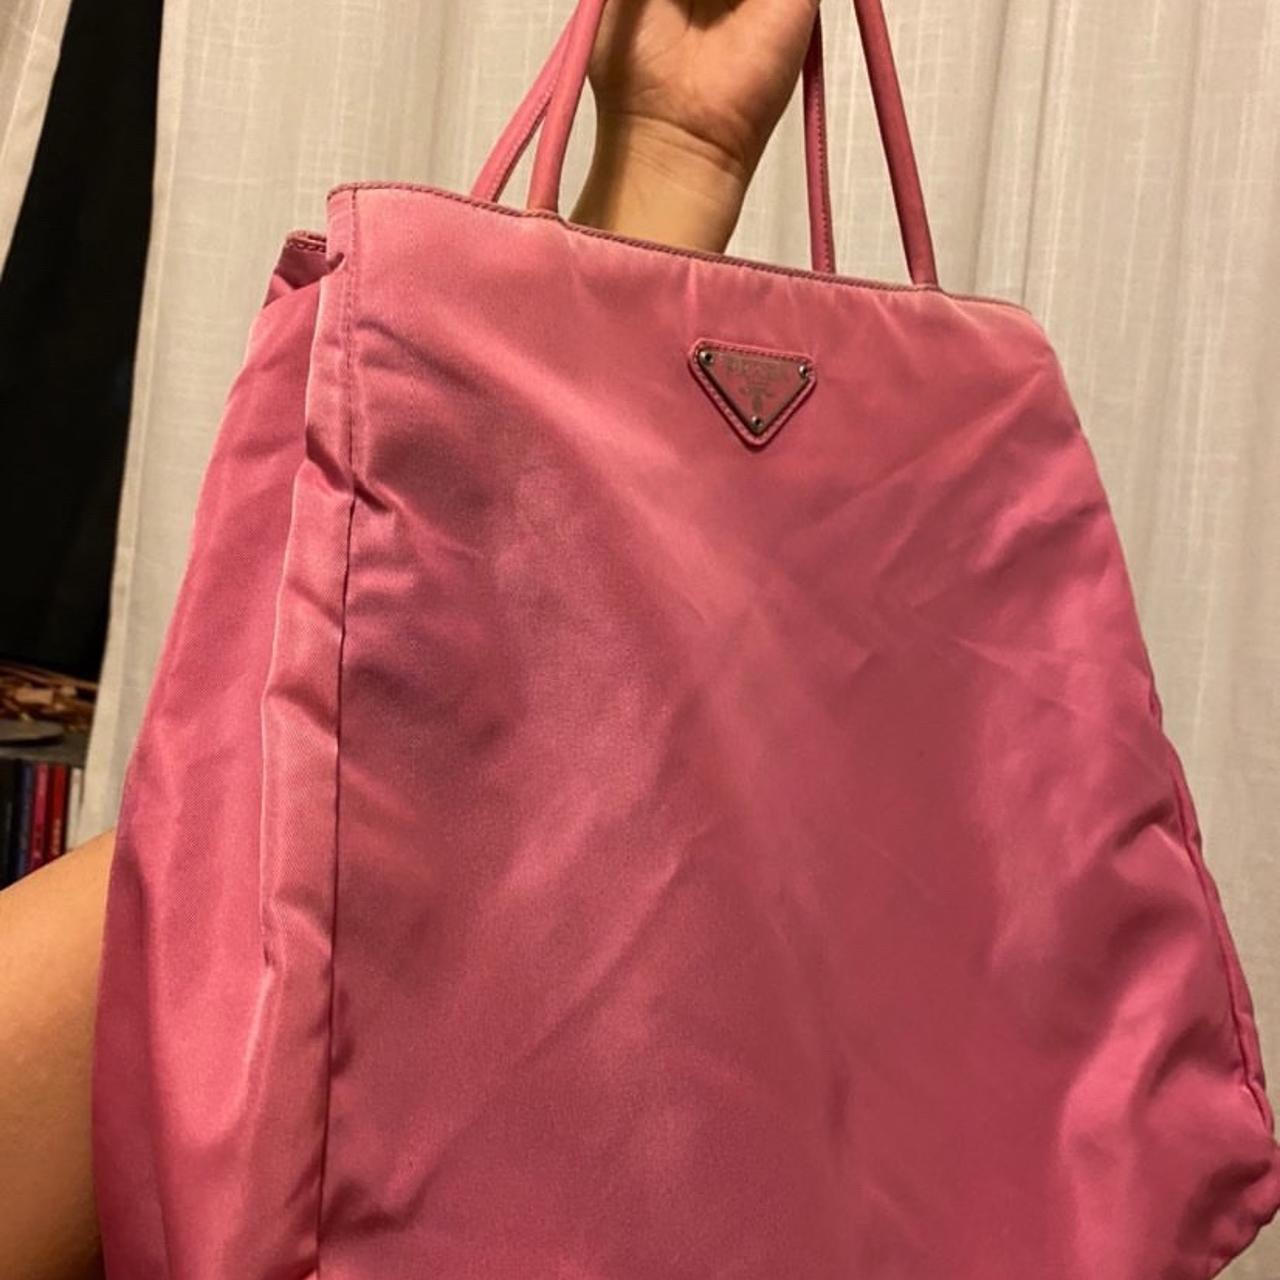 vintage Pink prada bag